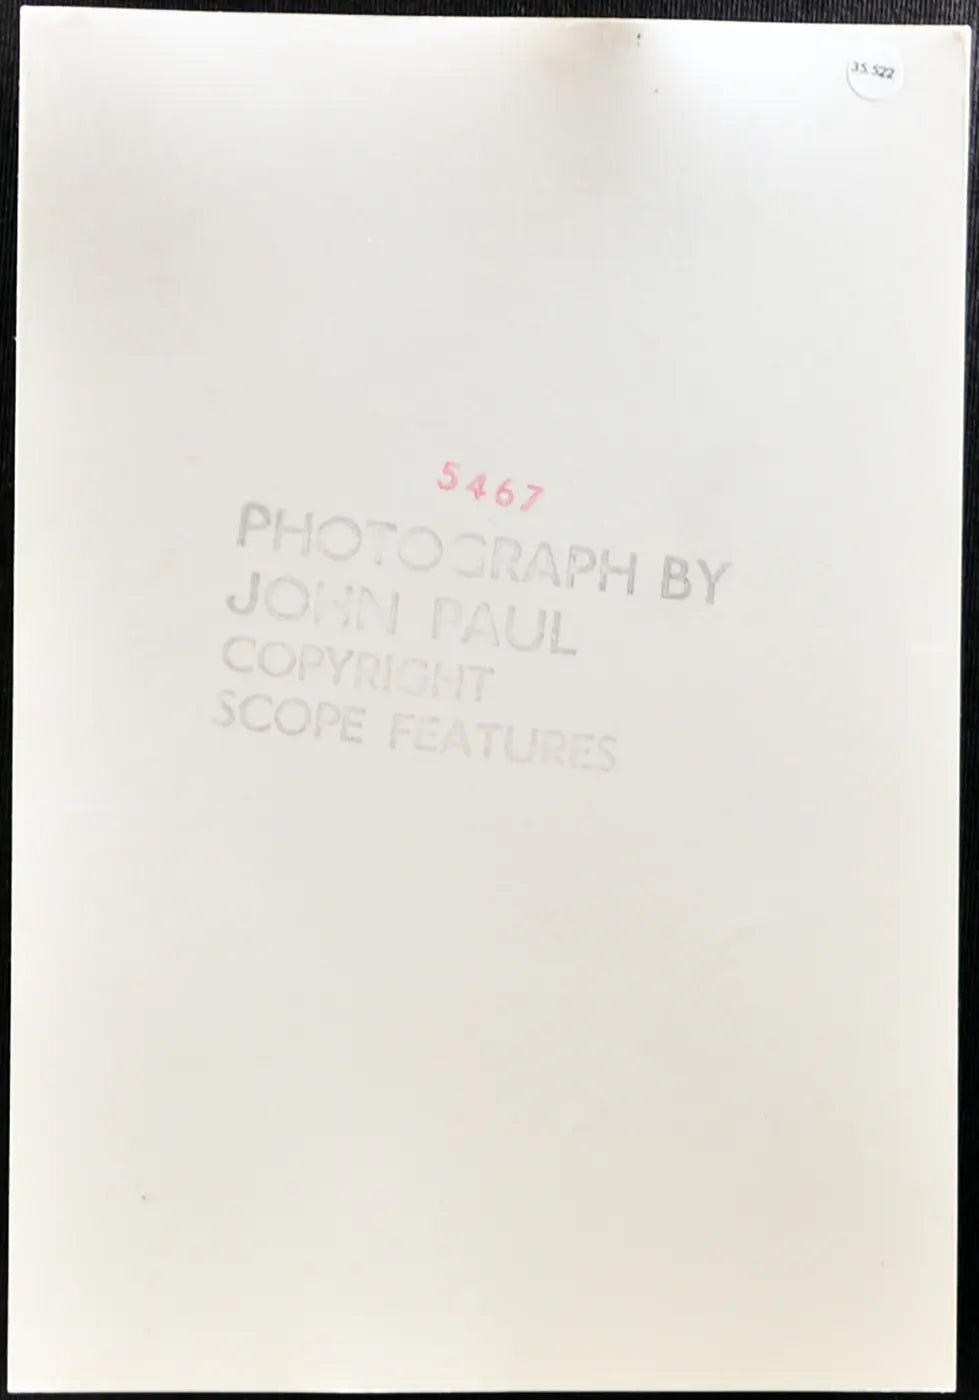 Gillian Duxbury Modella anni 80 Ft 35522 - Stampa 20x25 cm - Farabola Stampa ai sali d'argento